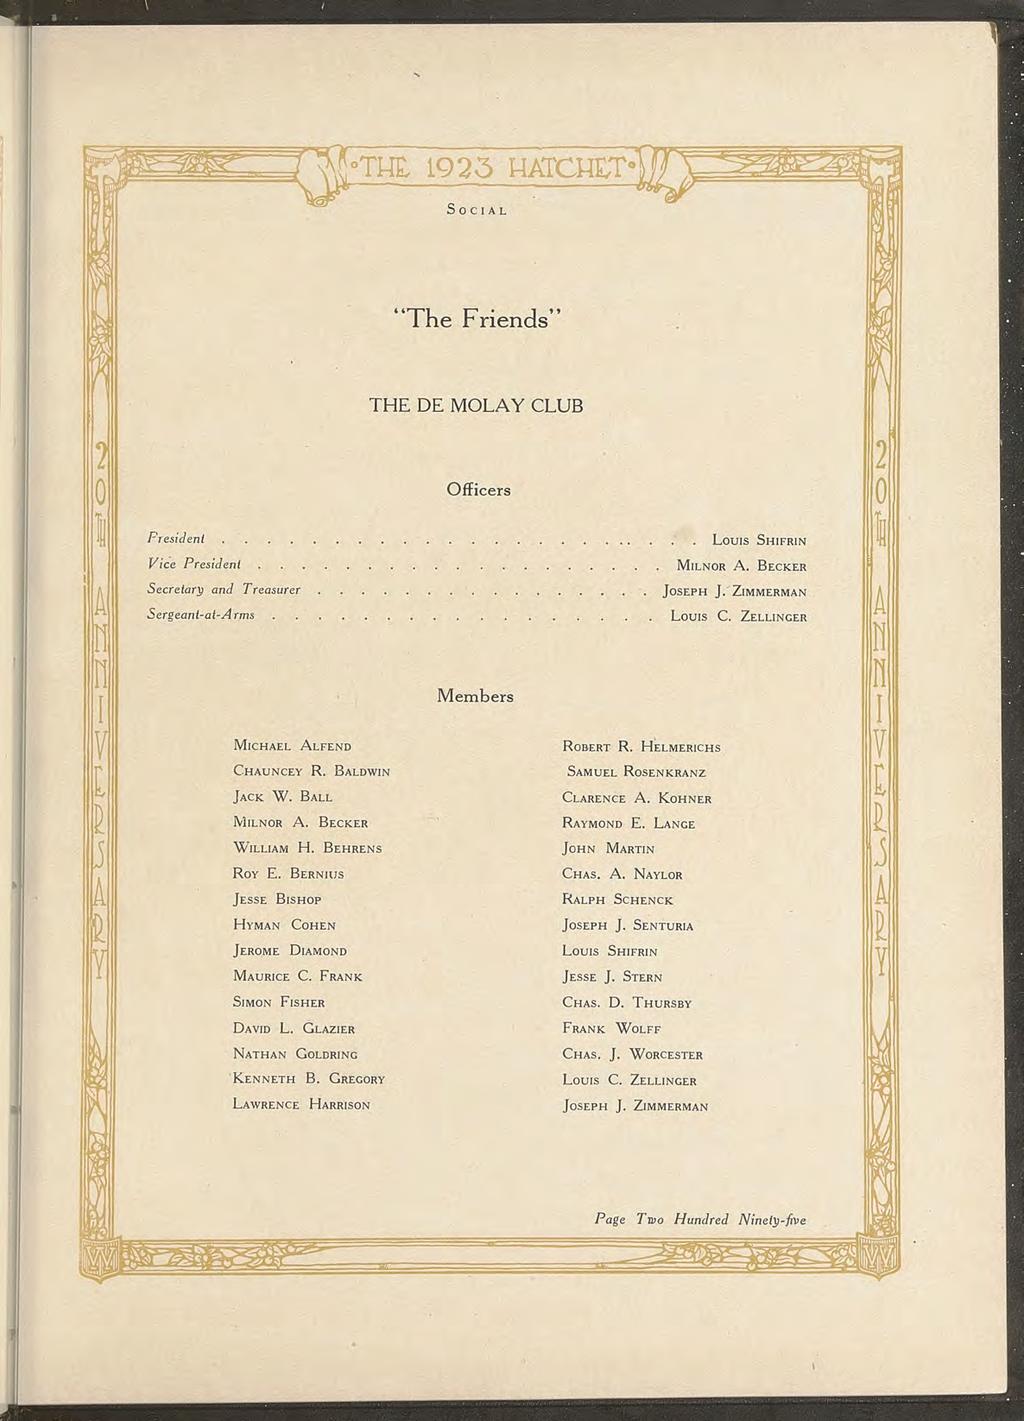 BEg^^oTHE, 1923 HTCHEX'fa ^^^^S SOCIL 'The Frends" H E 5 THE DE MOLY CLUB Offce Presdent Lous SHIFRIN Vce Presdent. MILNOR. BECKER Secretary and Treasurer ',- ;' JOSEPH J.